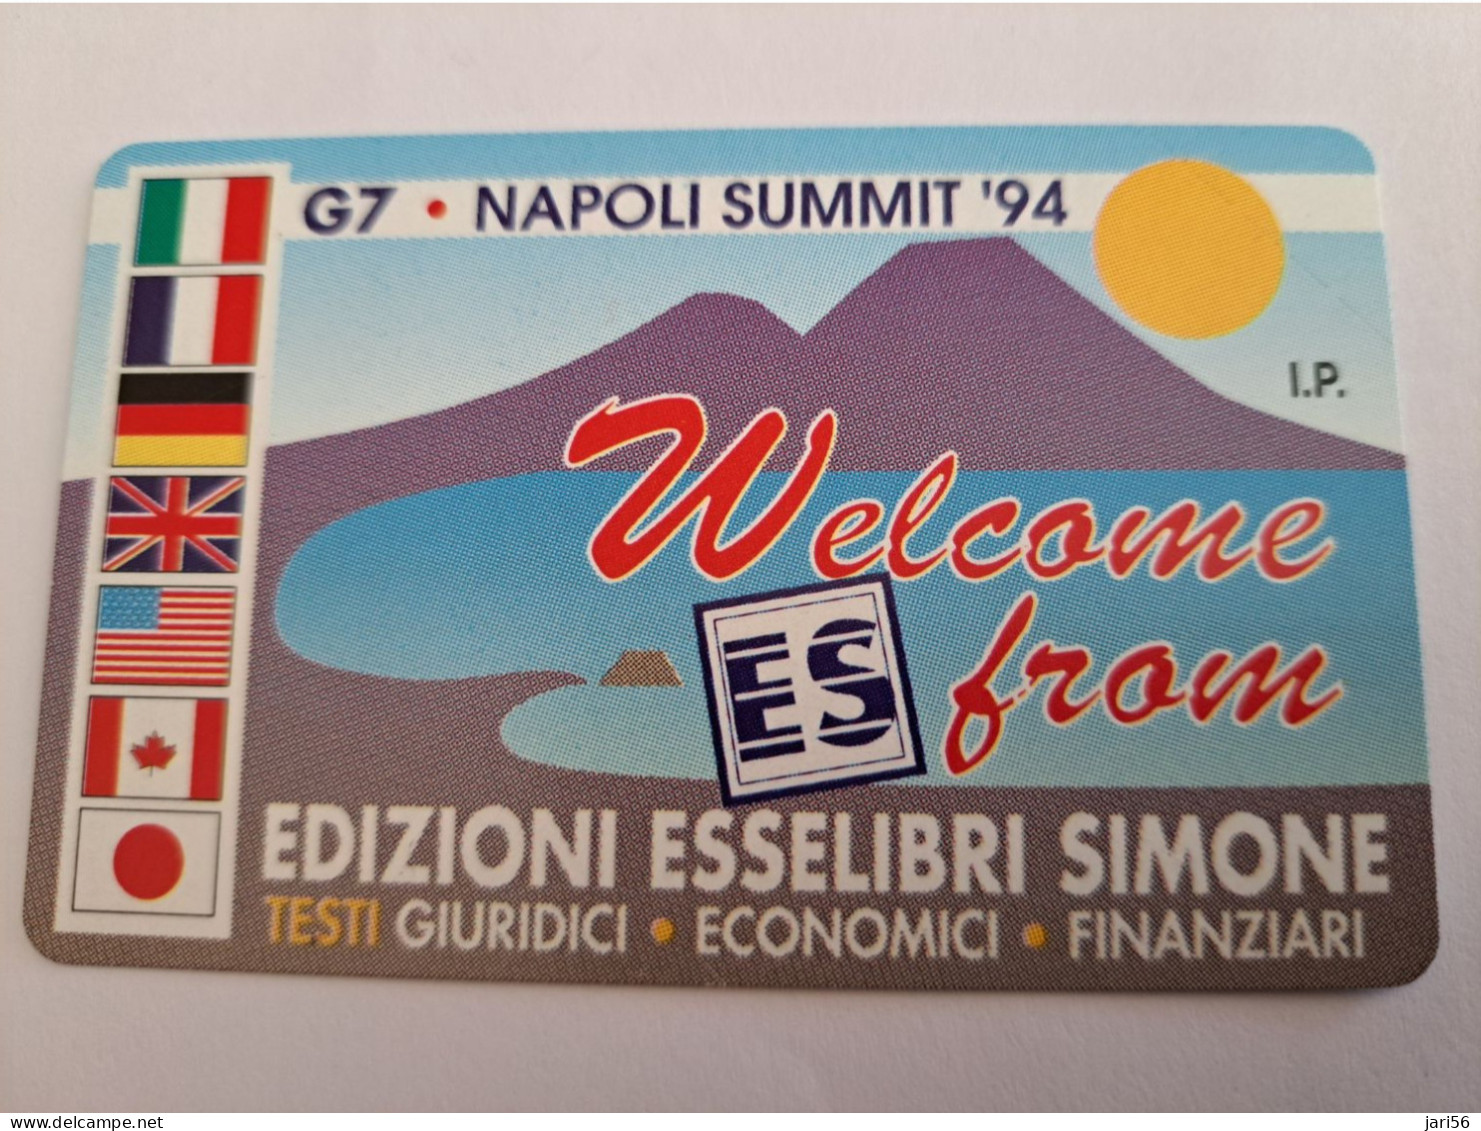 ITALIA LIRE 2000 /G7 NAPOLI SUMMIT '94 / WELCOME FROM ES/ FLAGS/  CARD / MINT    PREPAID   ** 16653** - Openbaar Gewoon